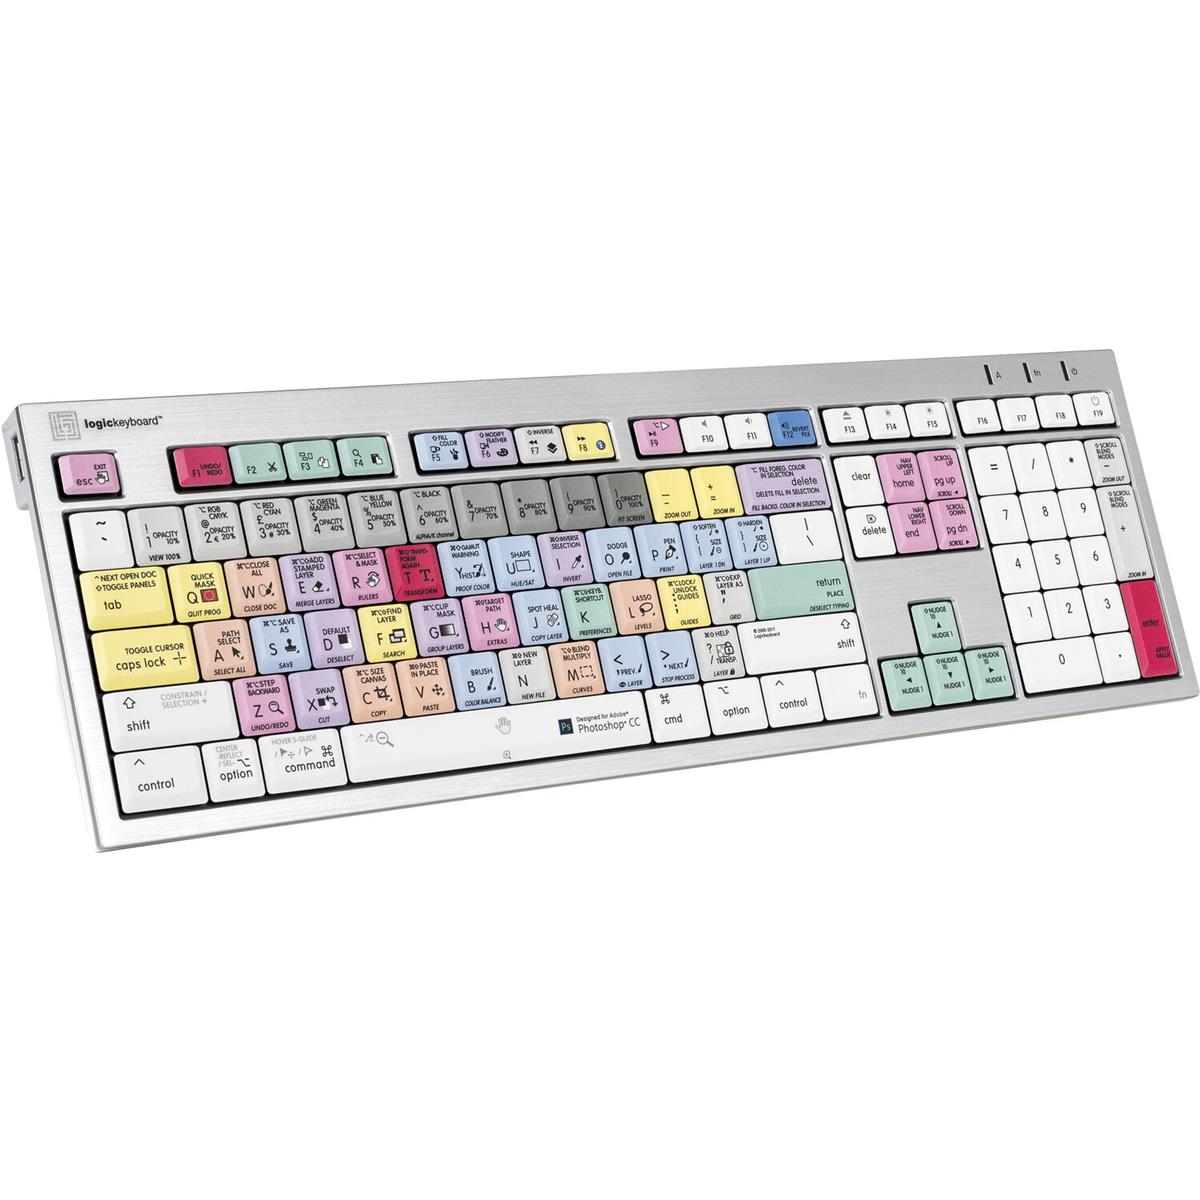 Image of LogicKeyboard ALBA Mac Wired Keyboard for Adobe Photoshop CC